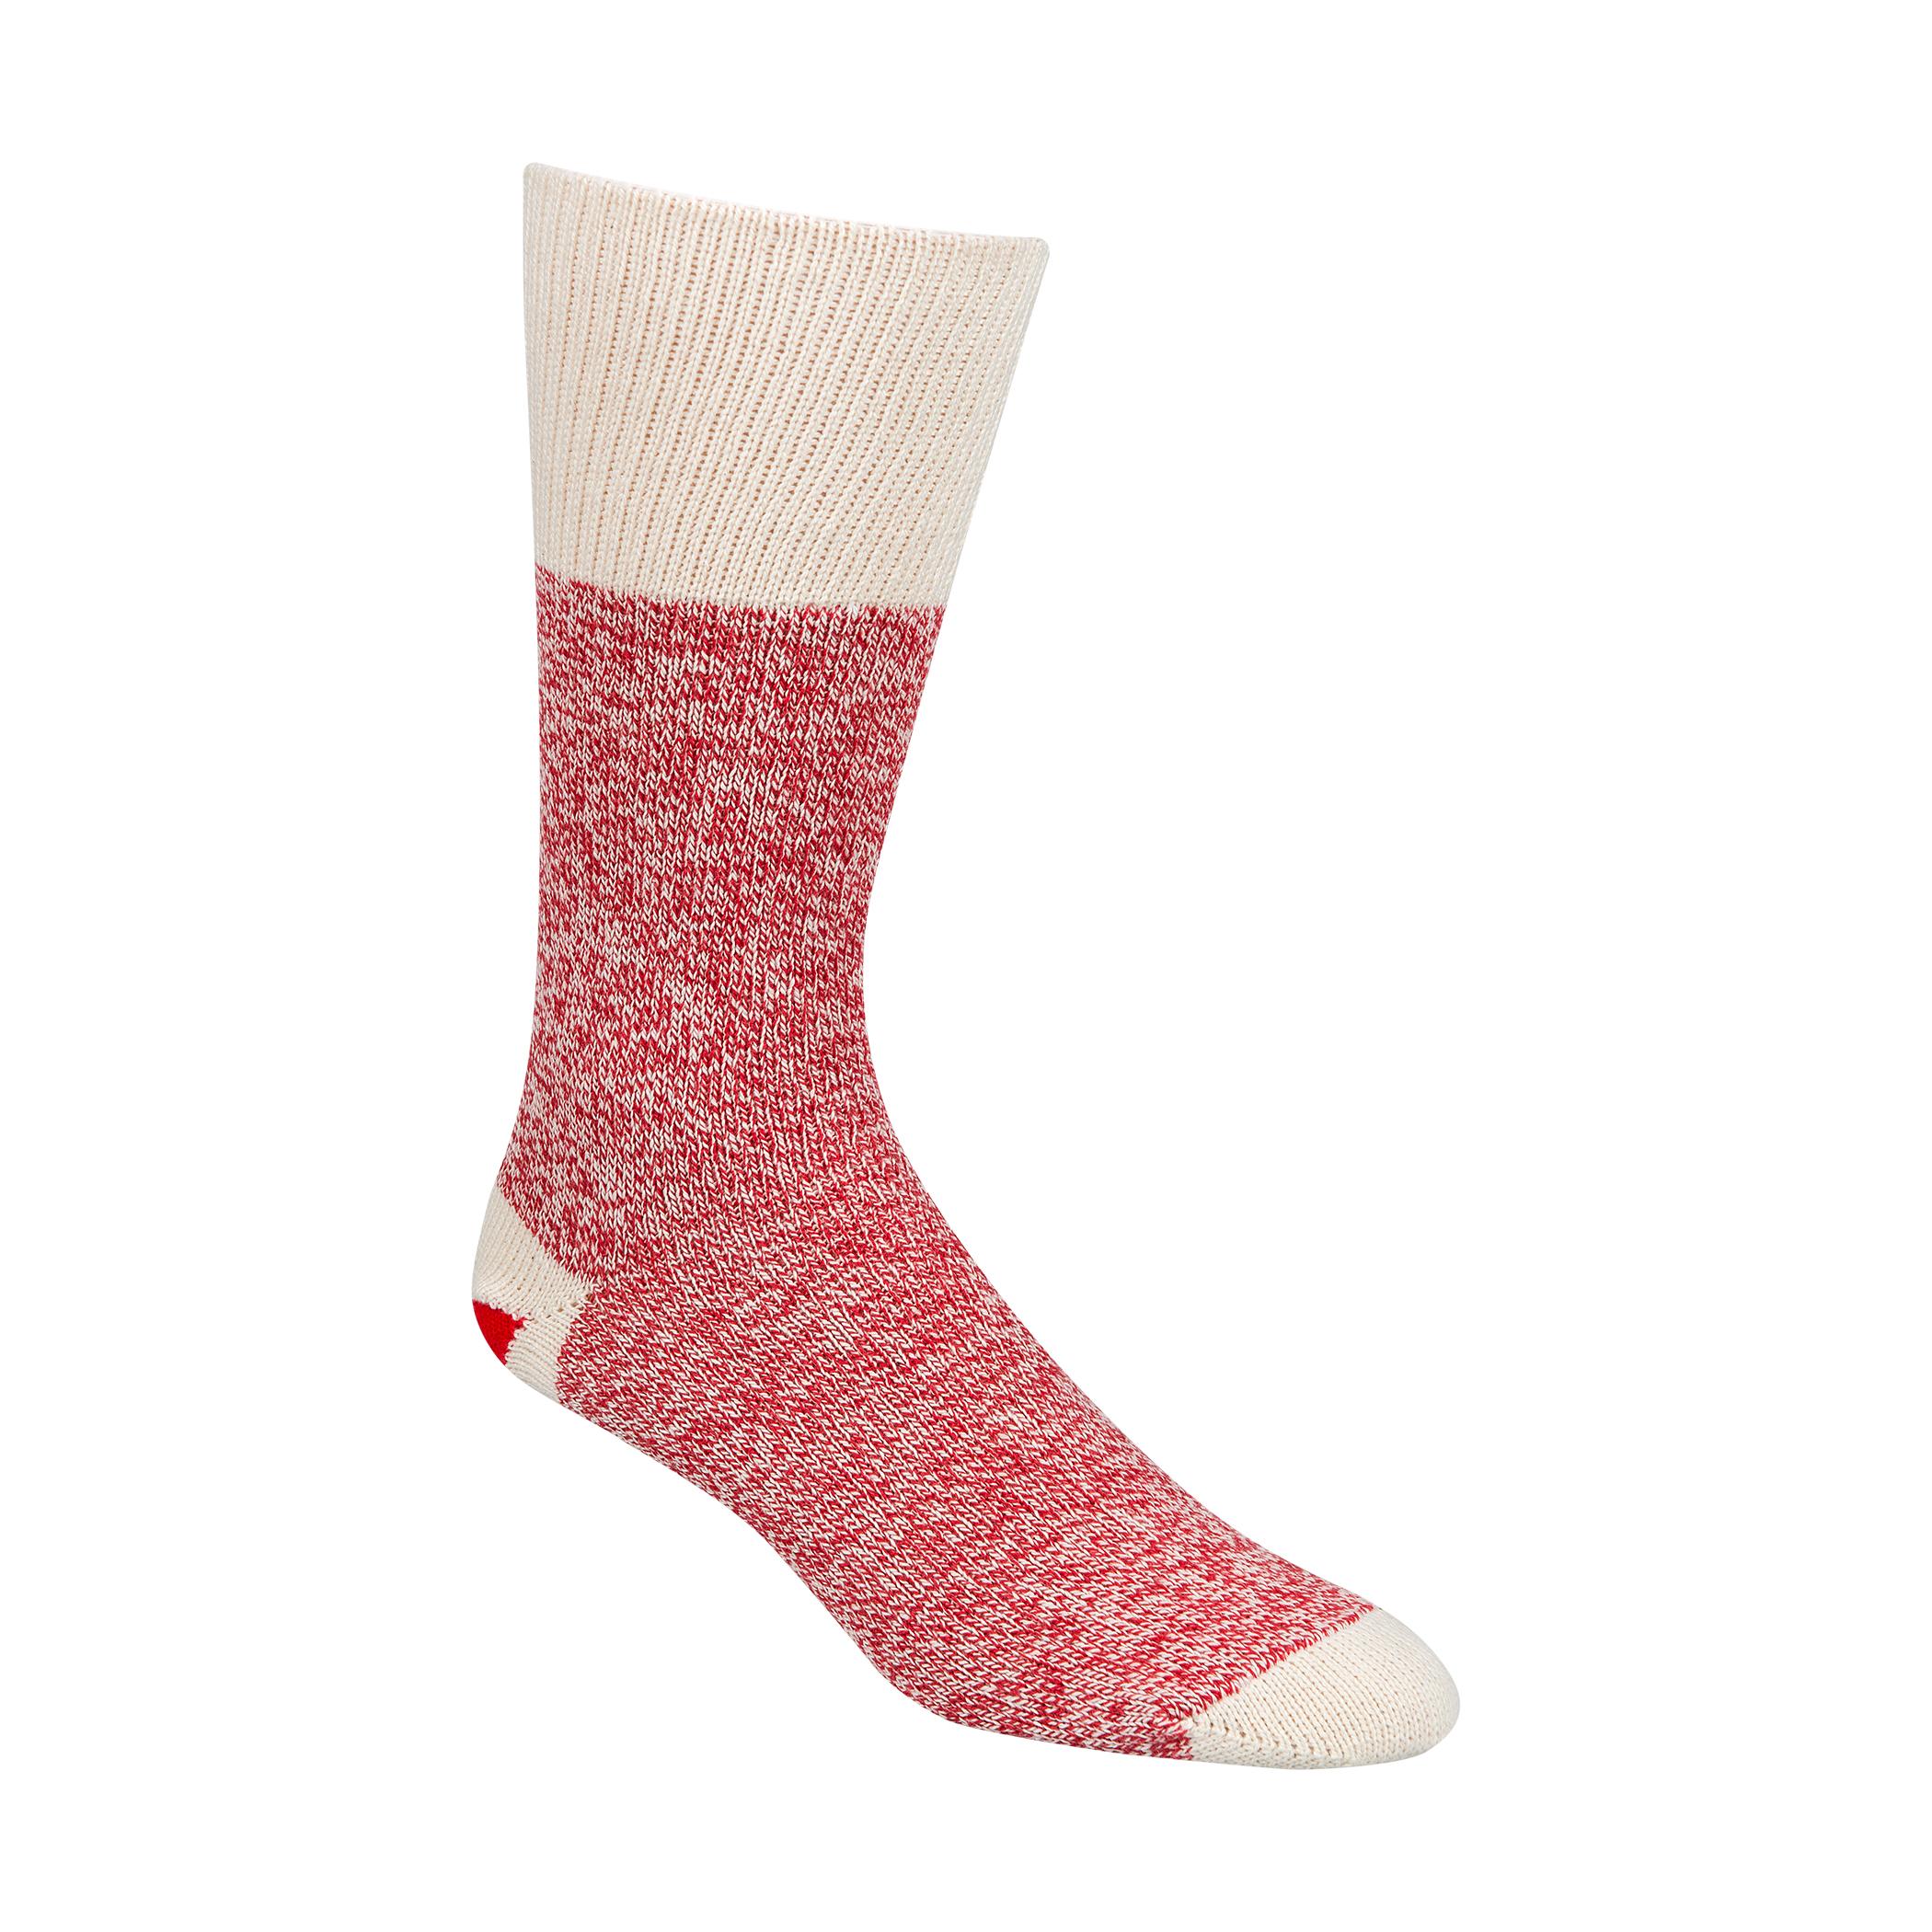  Red Heel Socks